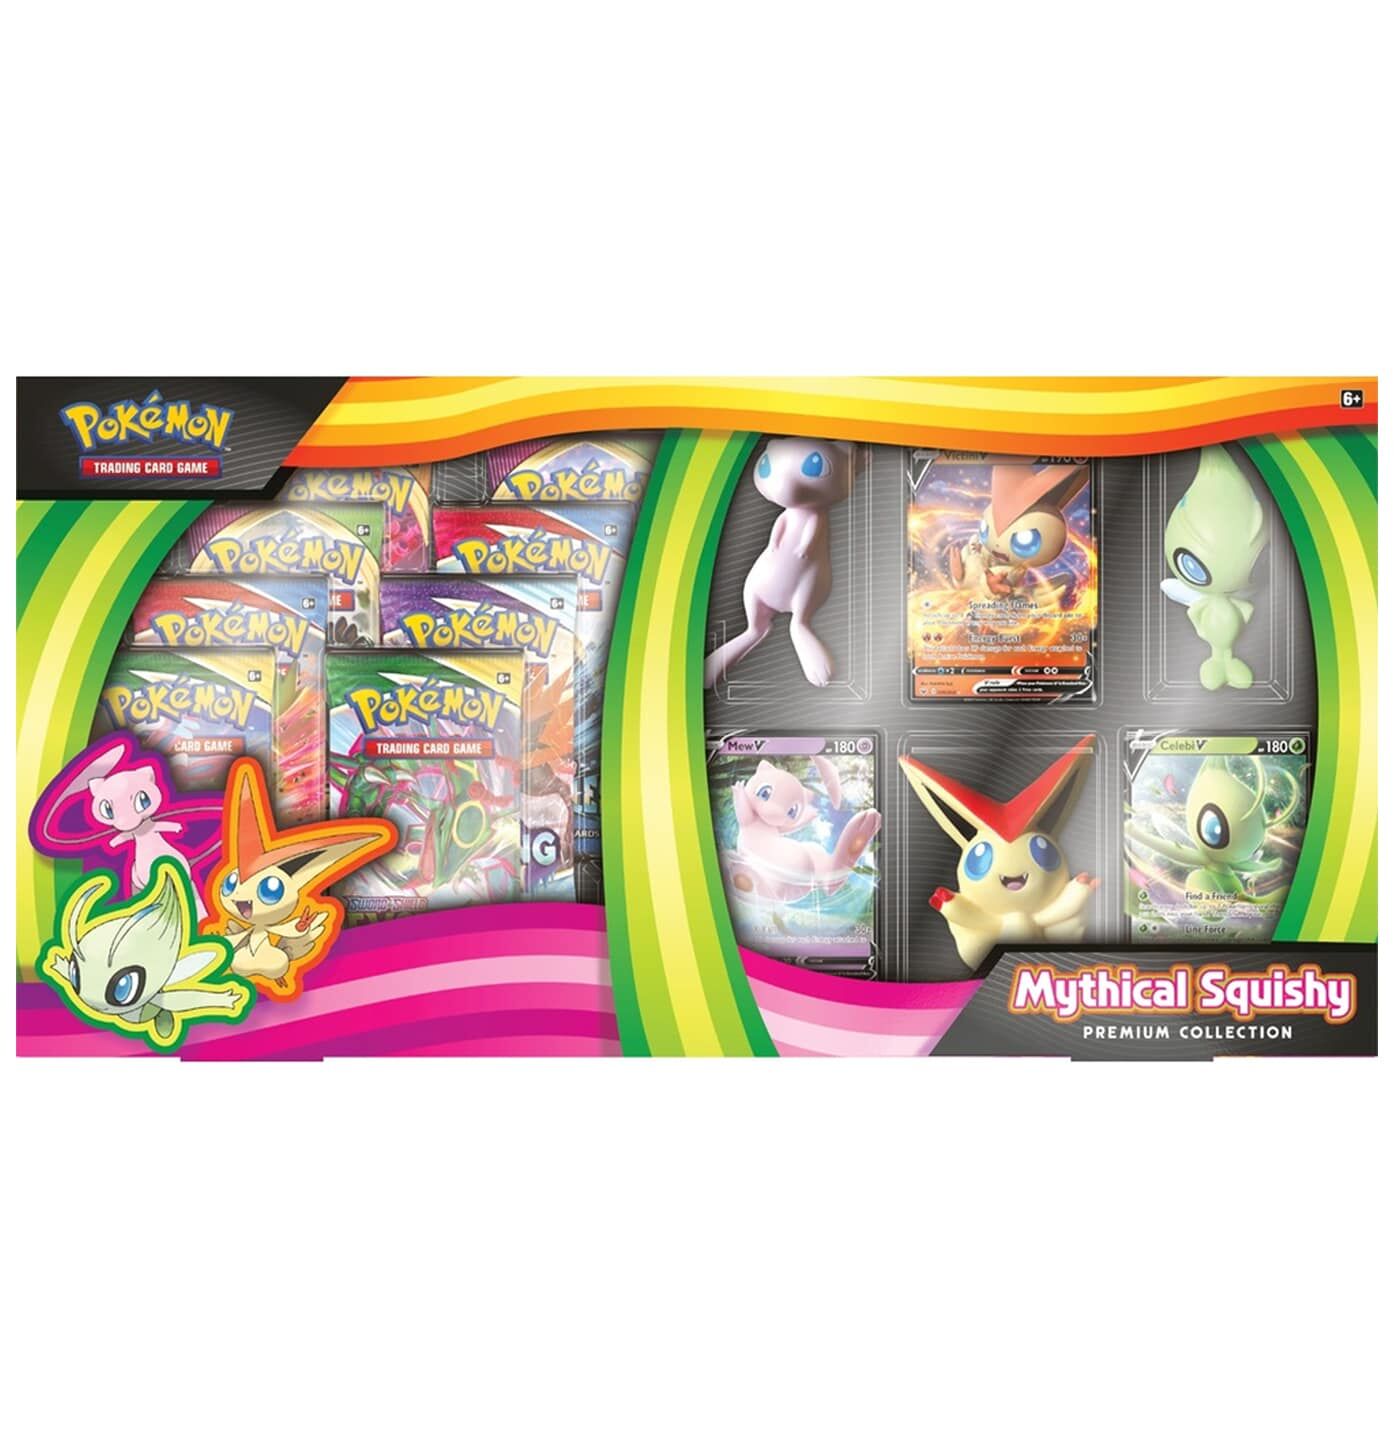 Pokémon Mythical Squishy Premium Collection Box - EN